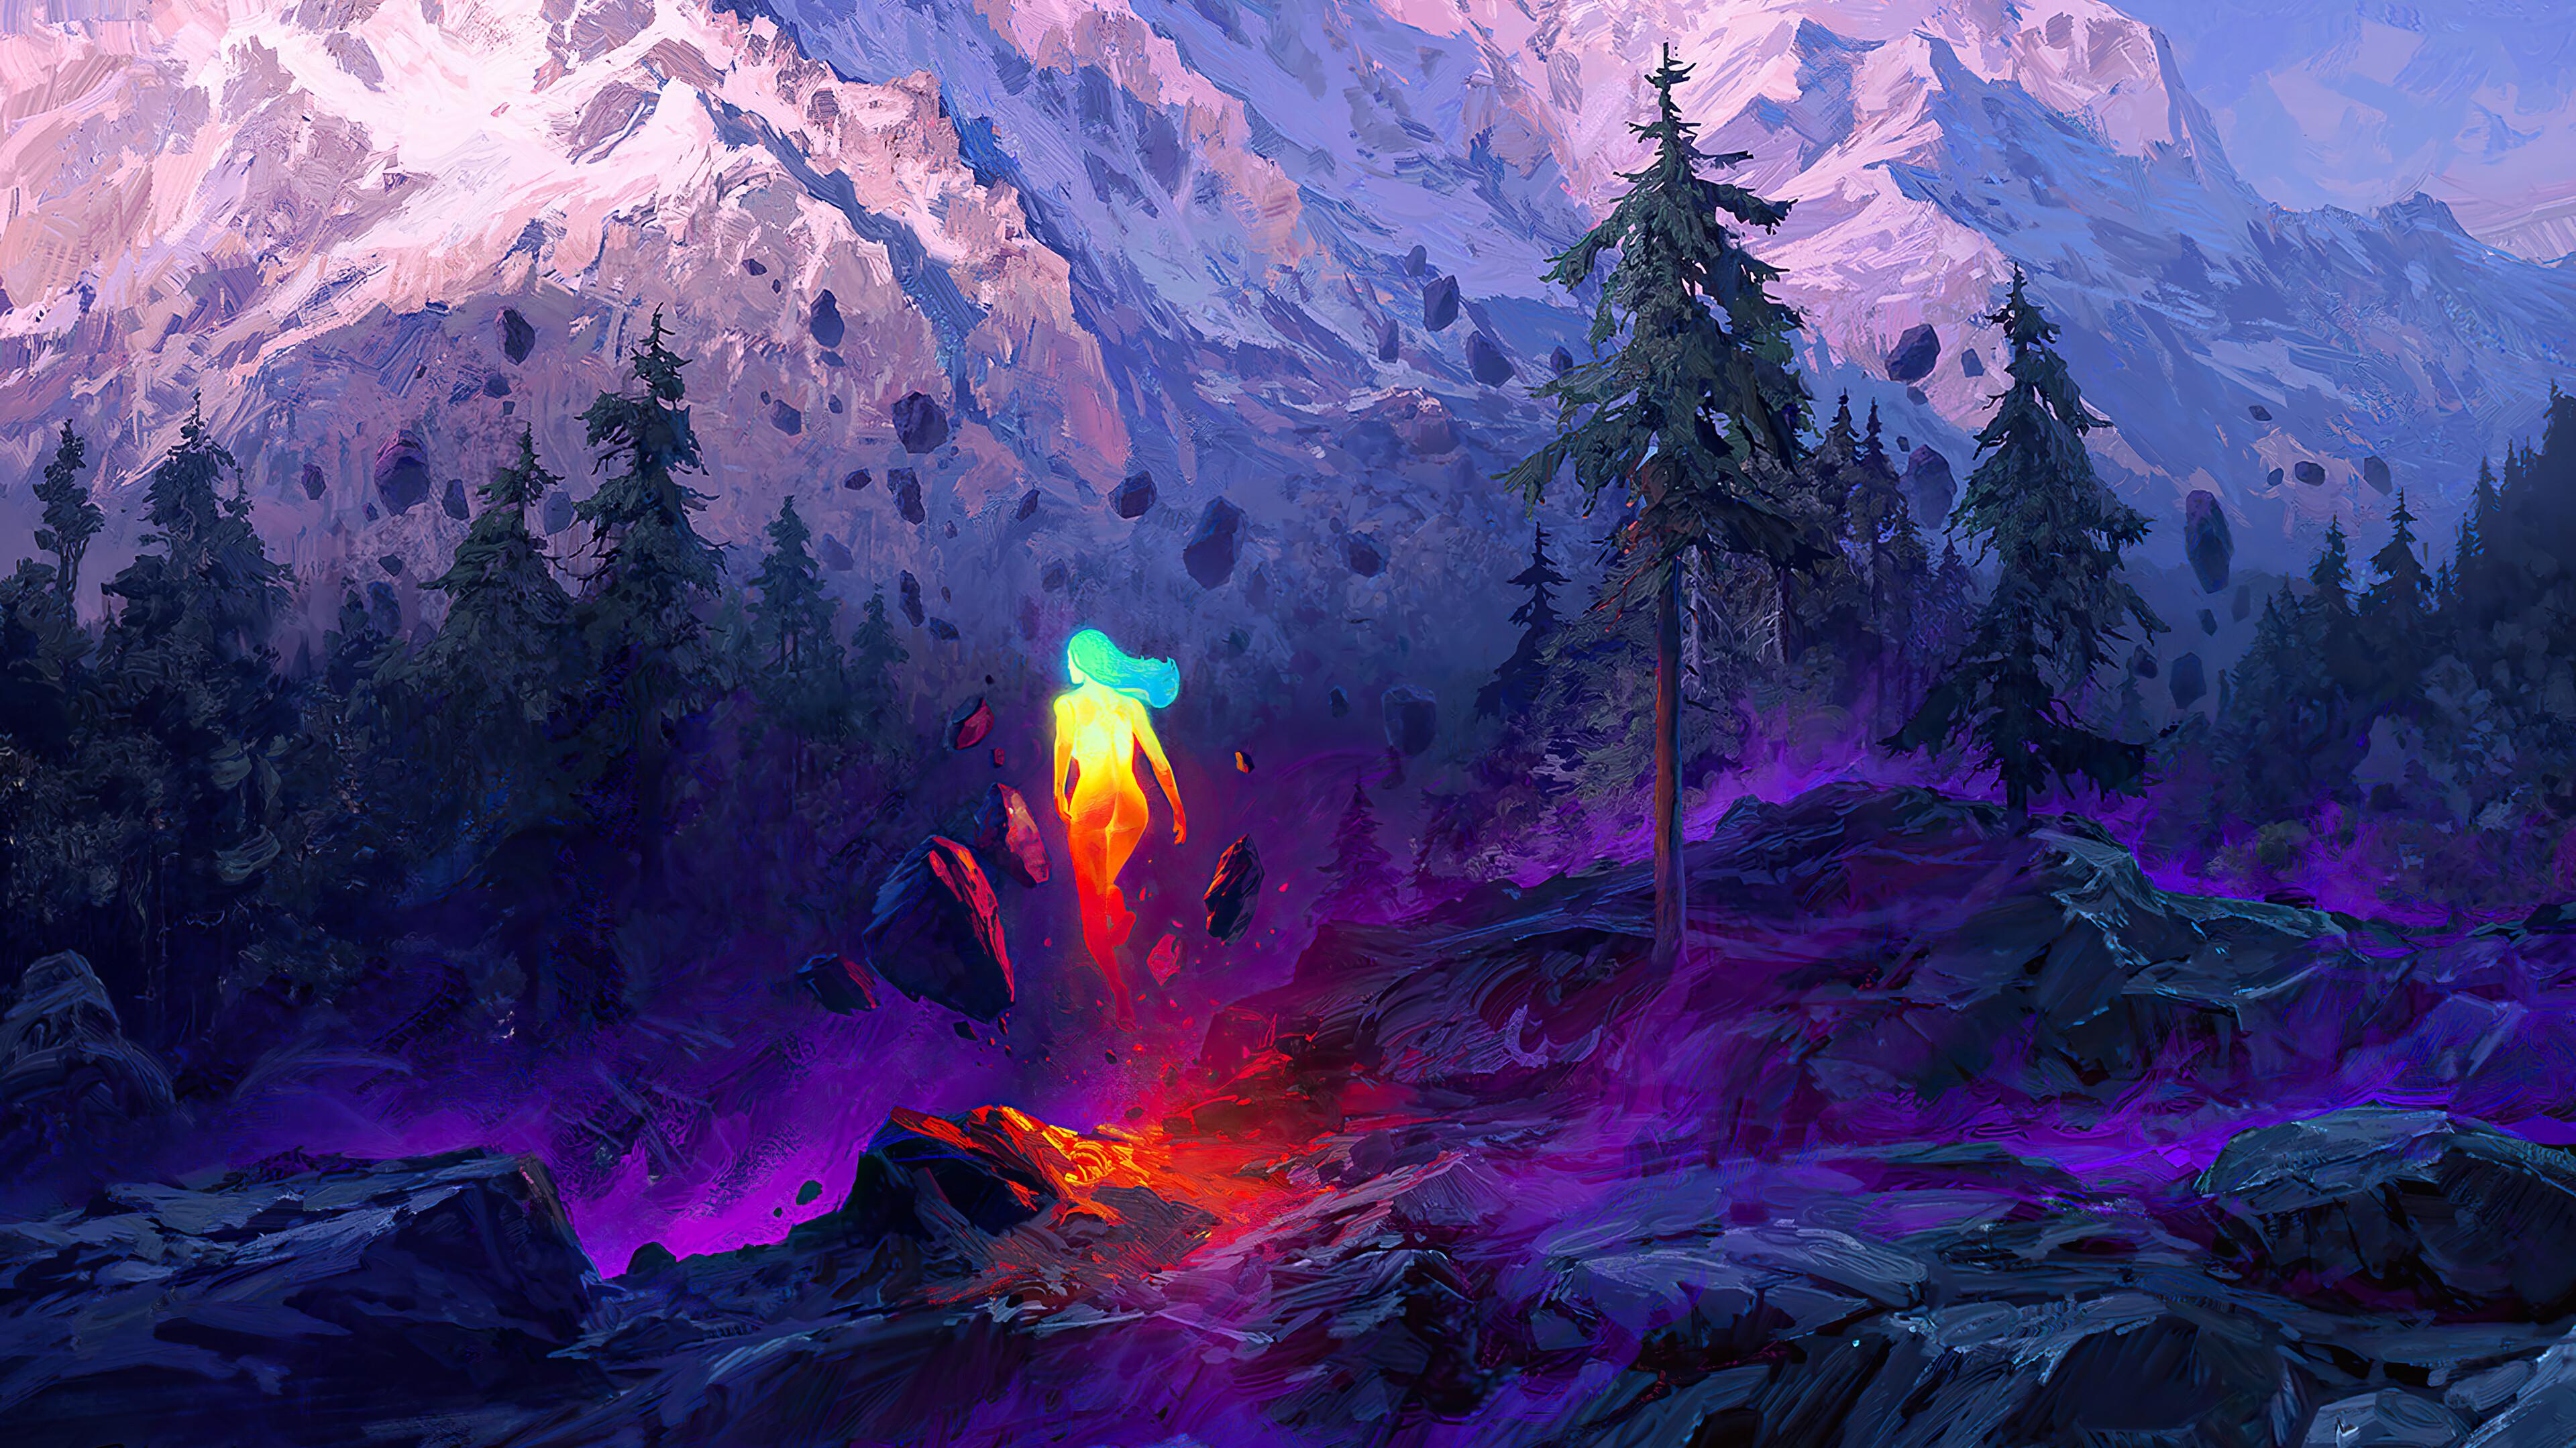 Fantasy Nature Mountain Scenery Digital Art 4k Wallpaper